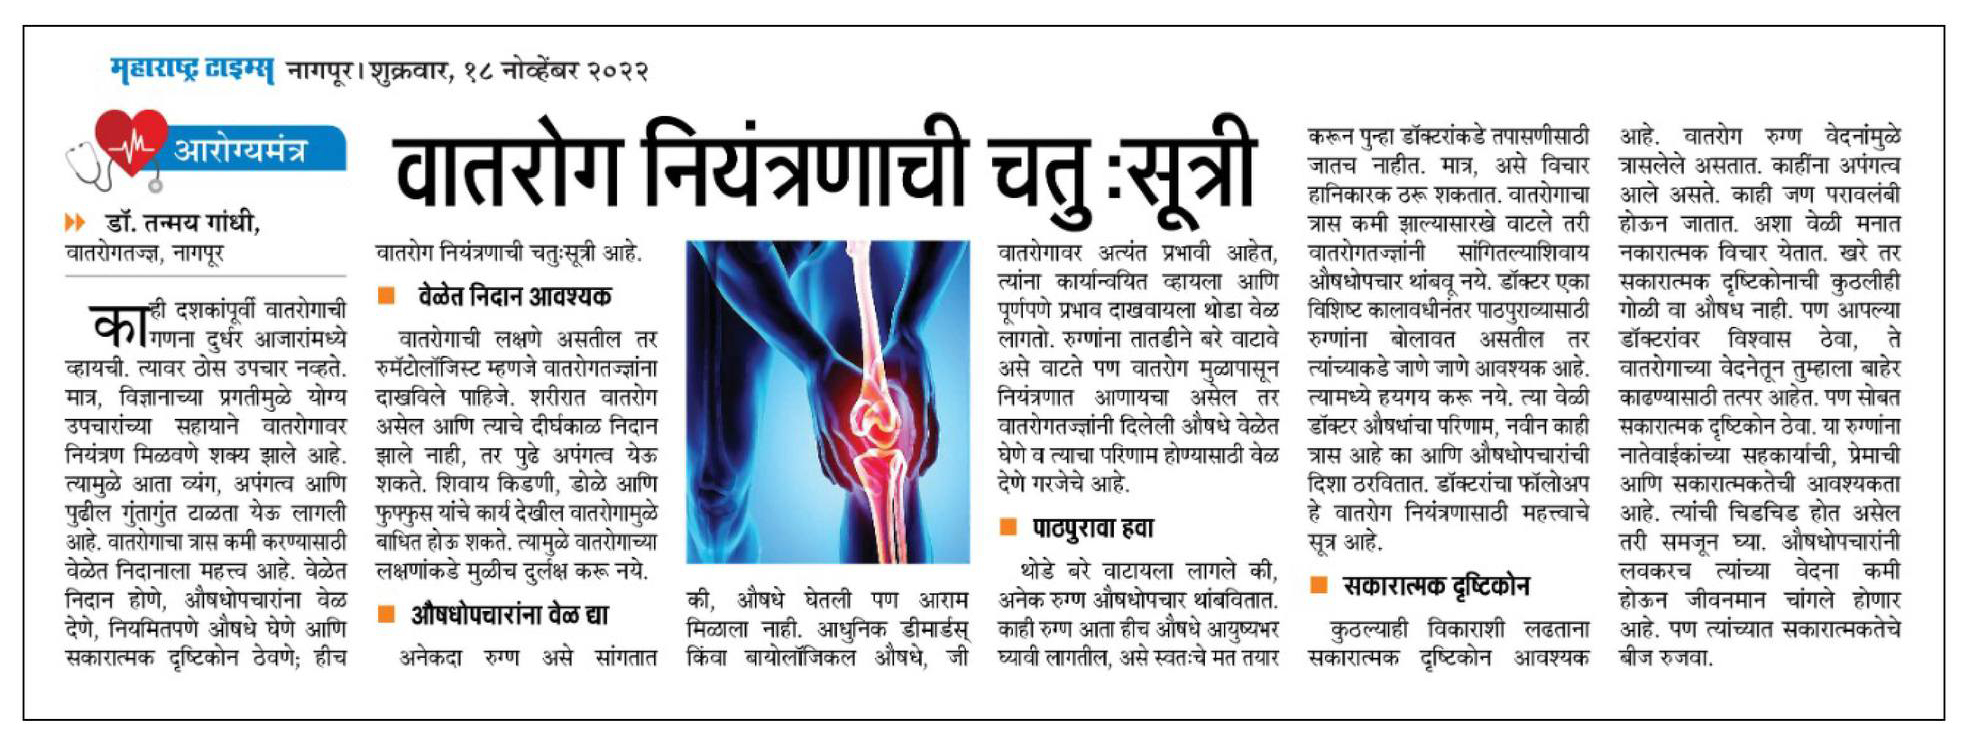 Dr Tanmay gandhi news on Arthritis